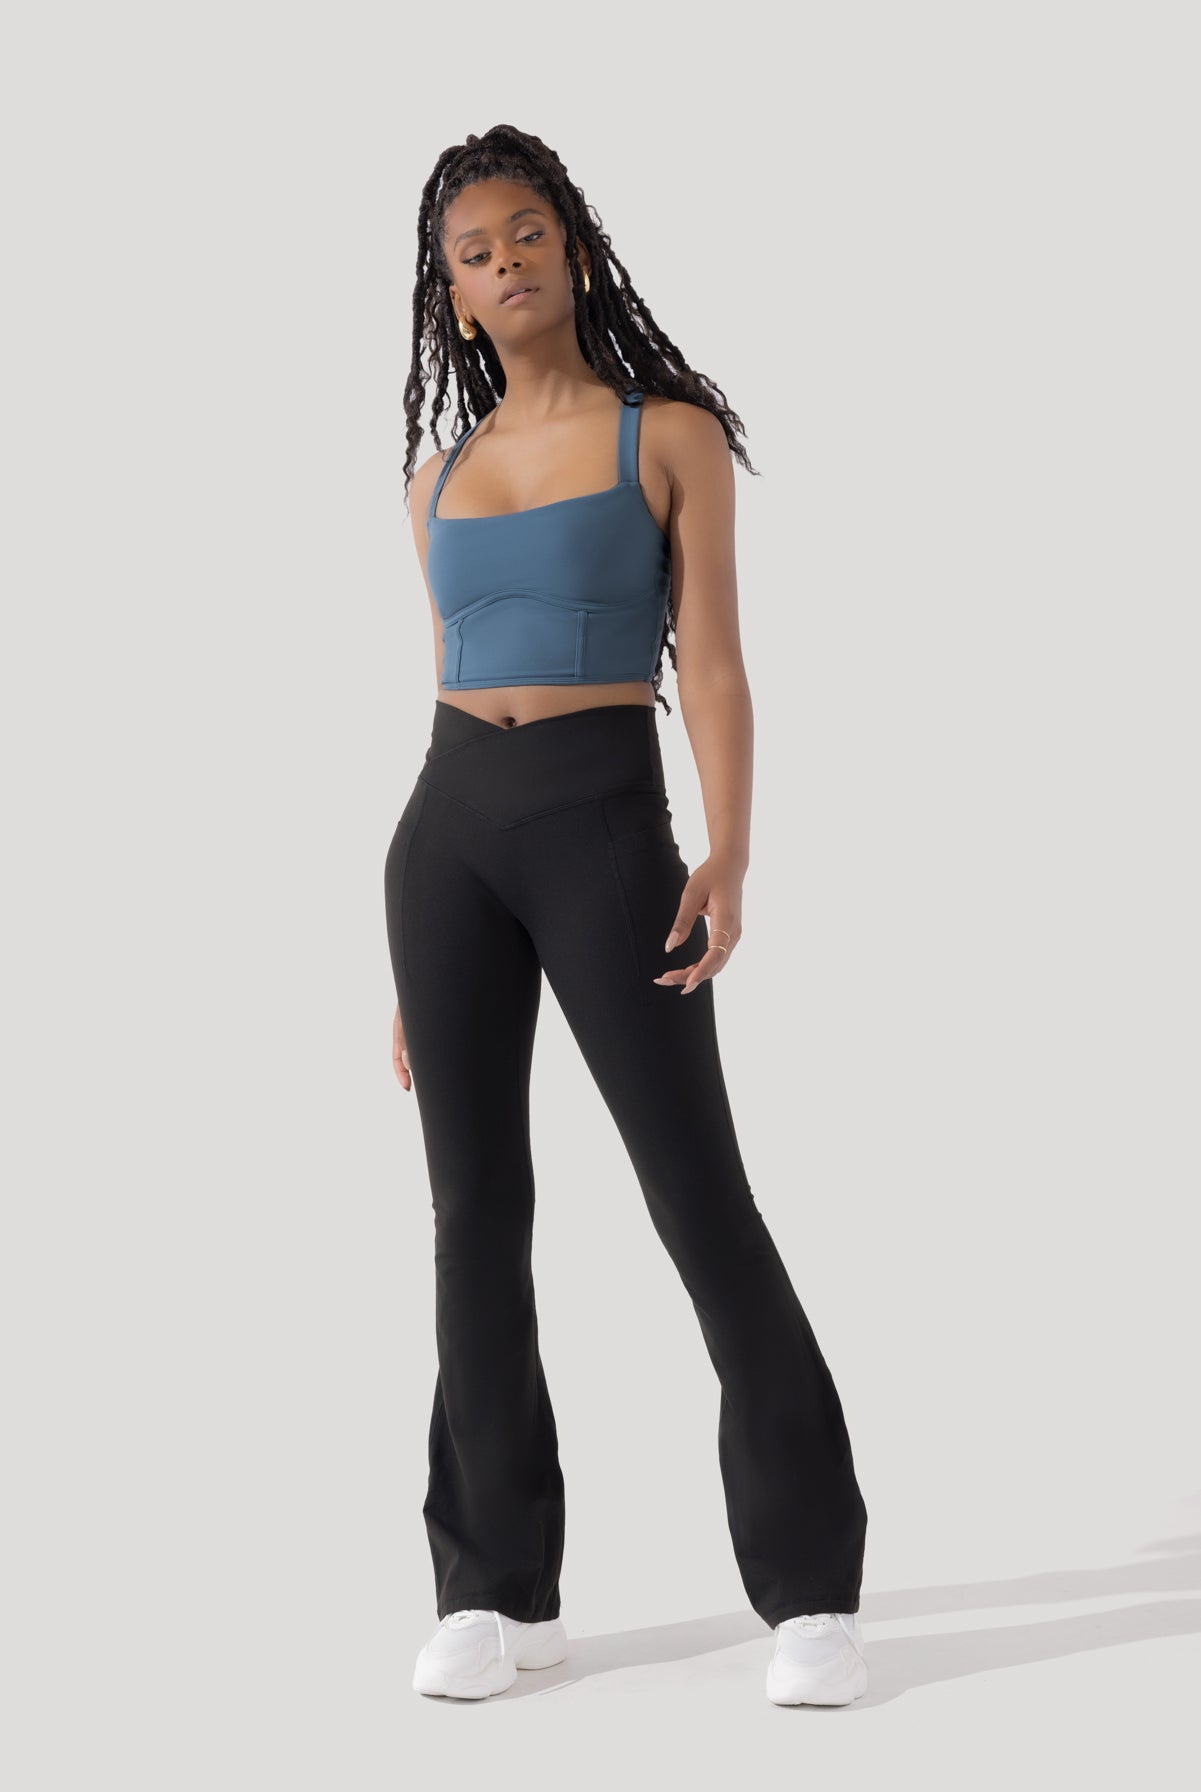 n/a Sexy Mesh Sports Top Running Shirts Yoga Top Fitness Women Gym Tops  Workout T Shirt Long Sleeve Yoga Shirt Sportswear (Color : Black, Size : S  code) : : Fashion